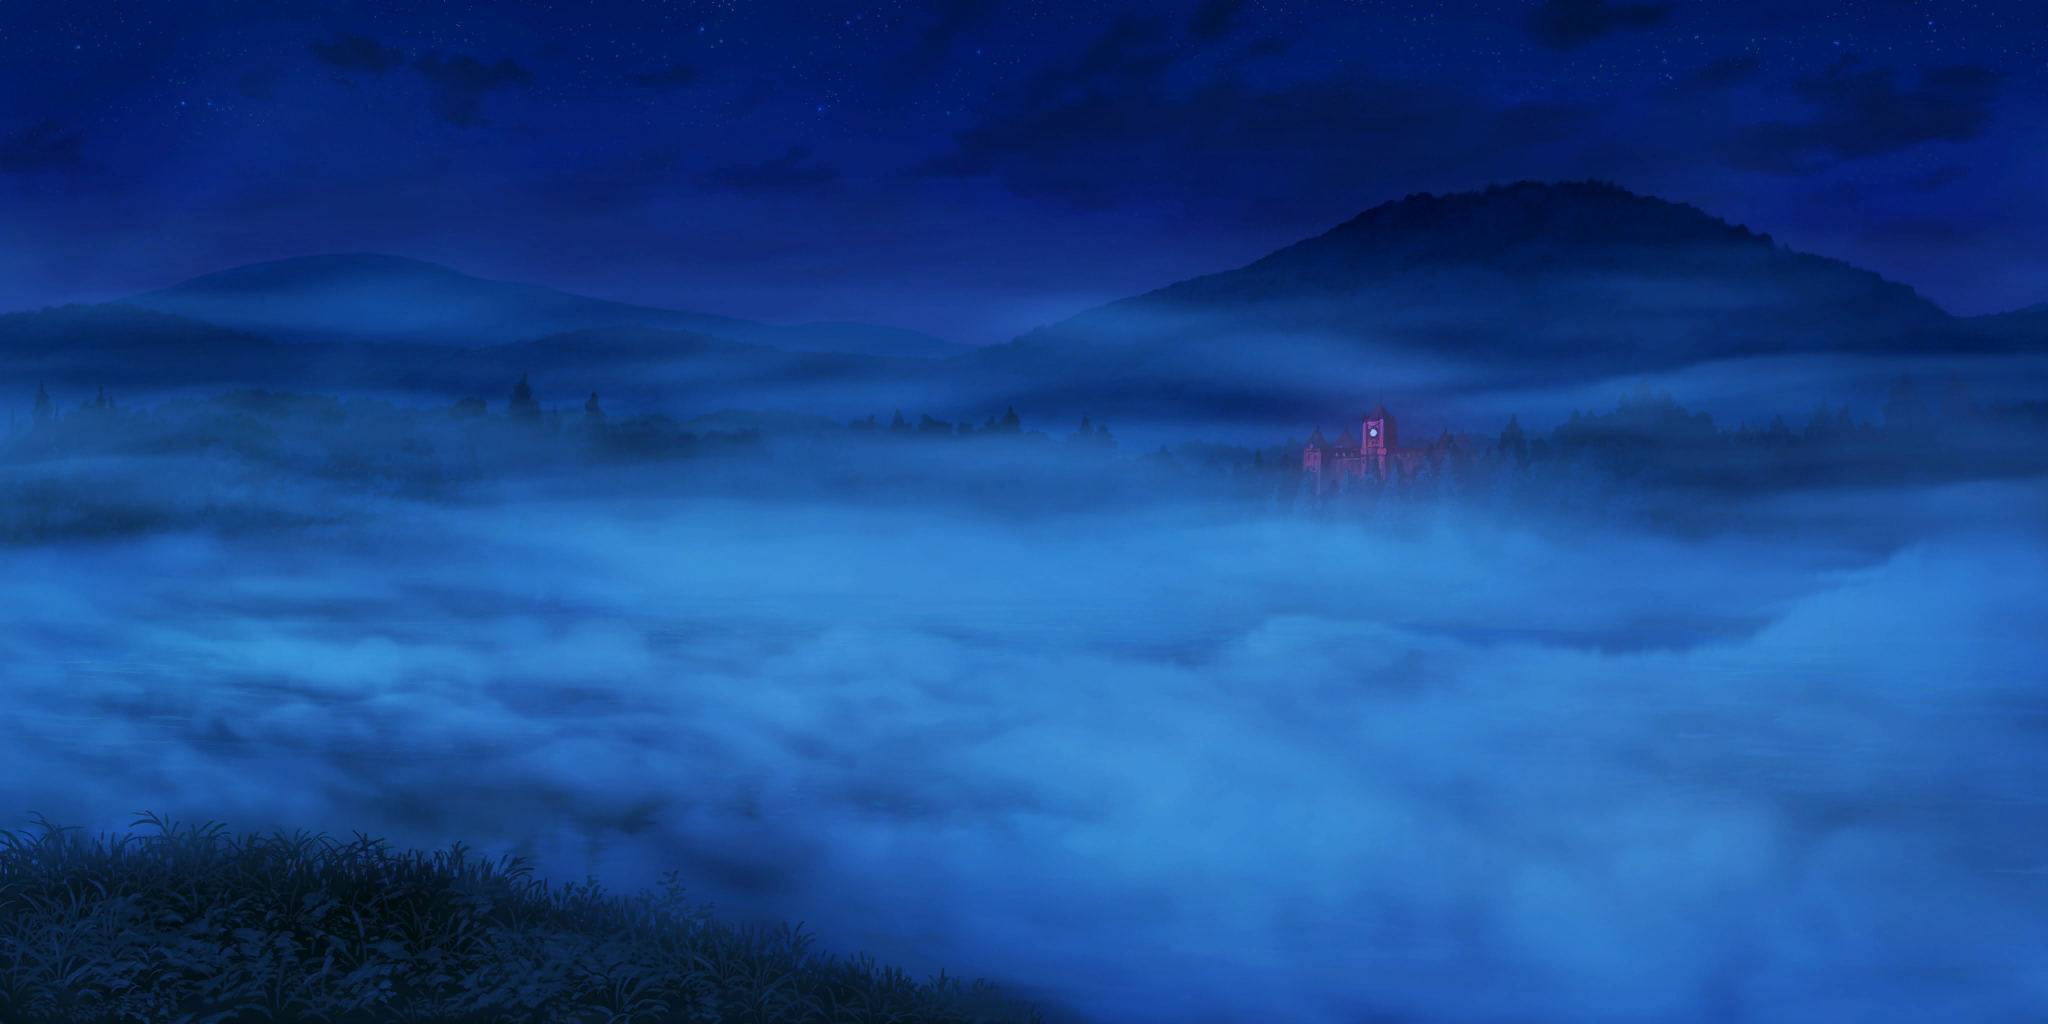 Touhou LostWord - Misty Lake (Night)